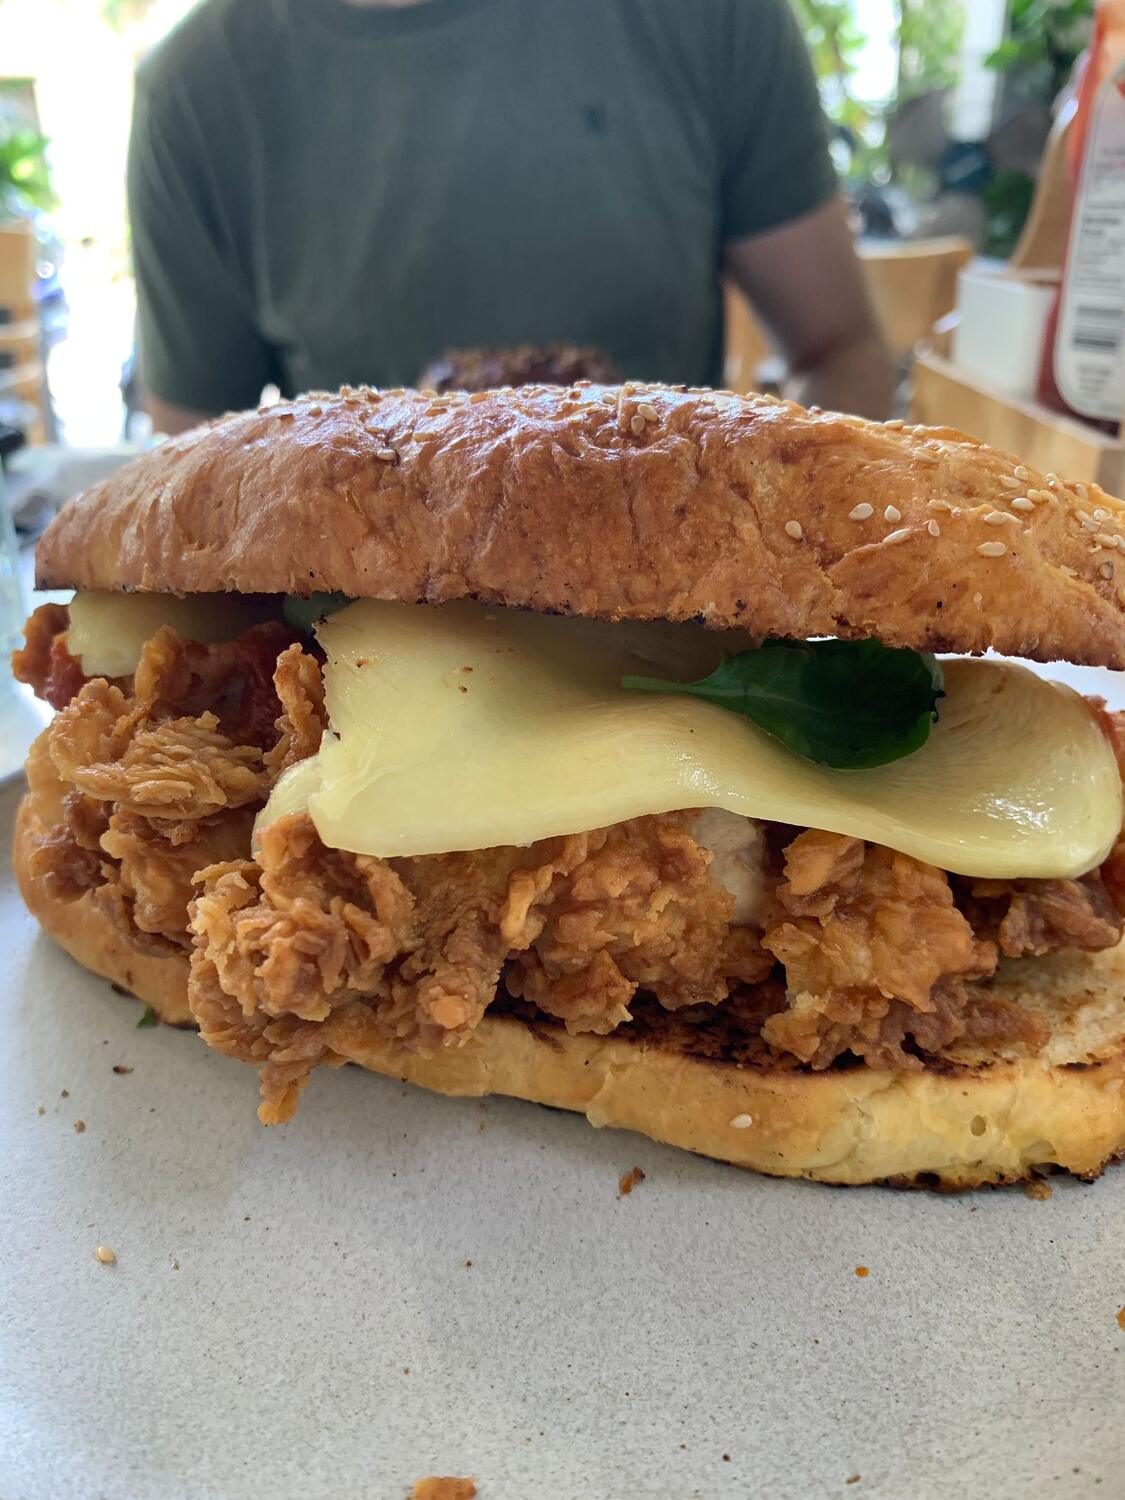 Jeremy Kitchen fried chicken sandwich on a bun